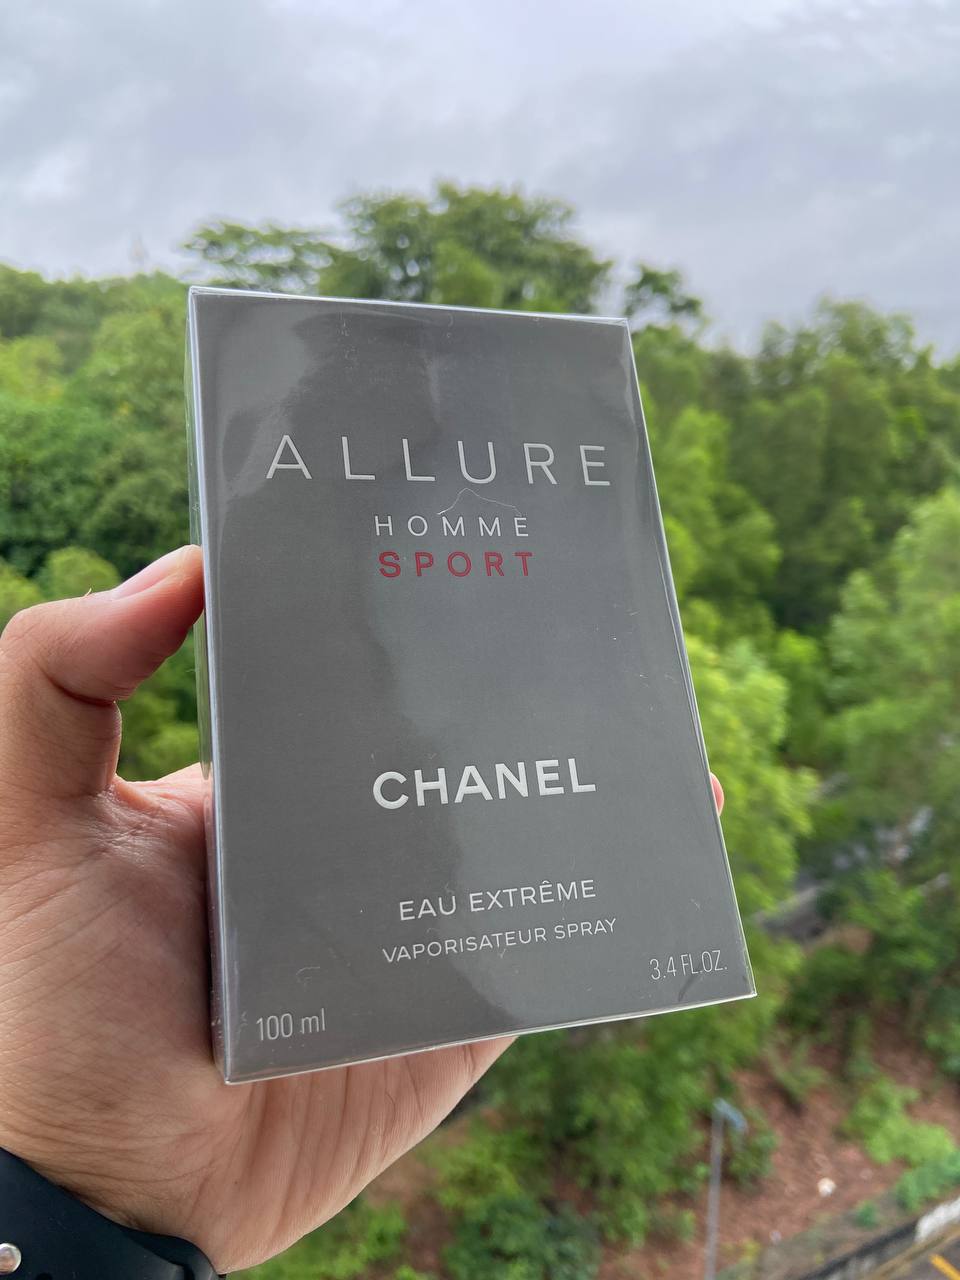 Malaysia Boutique Stock] Chanel ALLURE HOMME SPORT Eau Extreme Eau